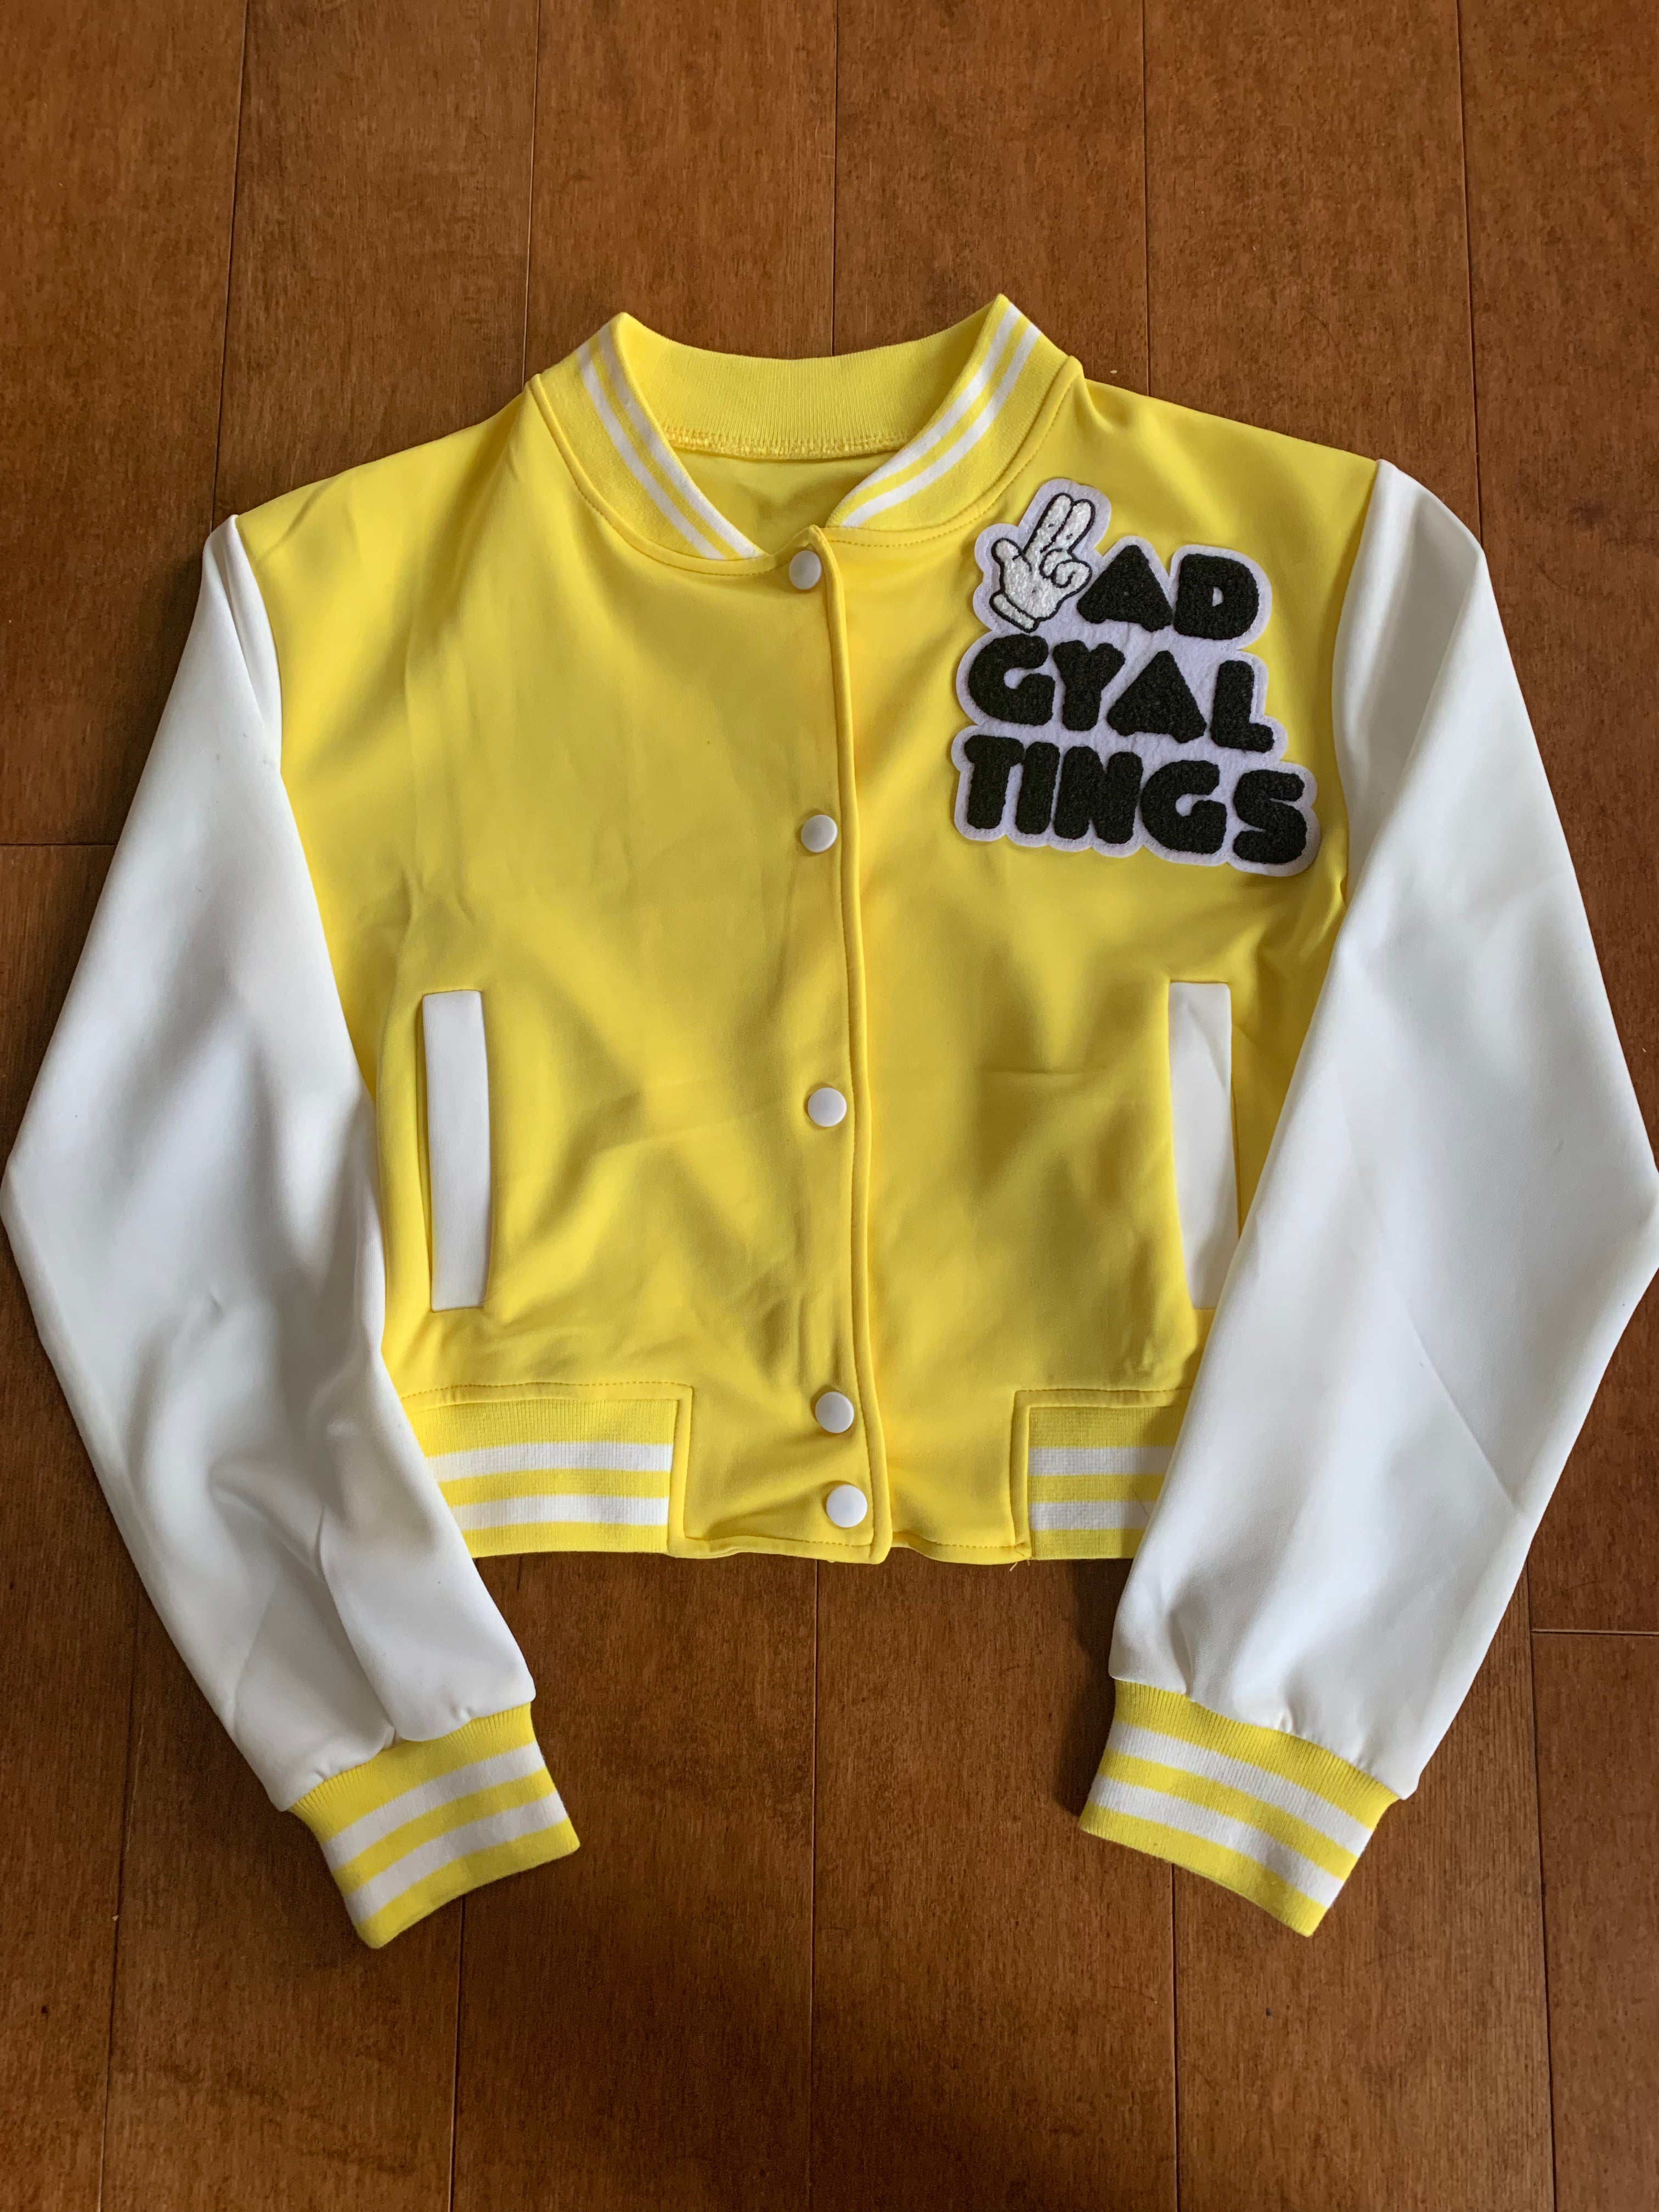 Bad Gyal Tings Yellow Lightweight Varsity Jacket